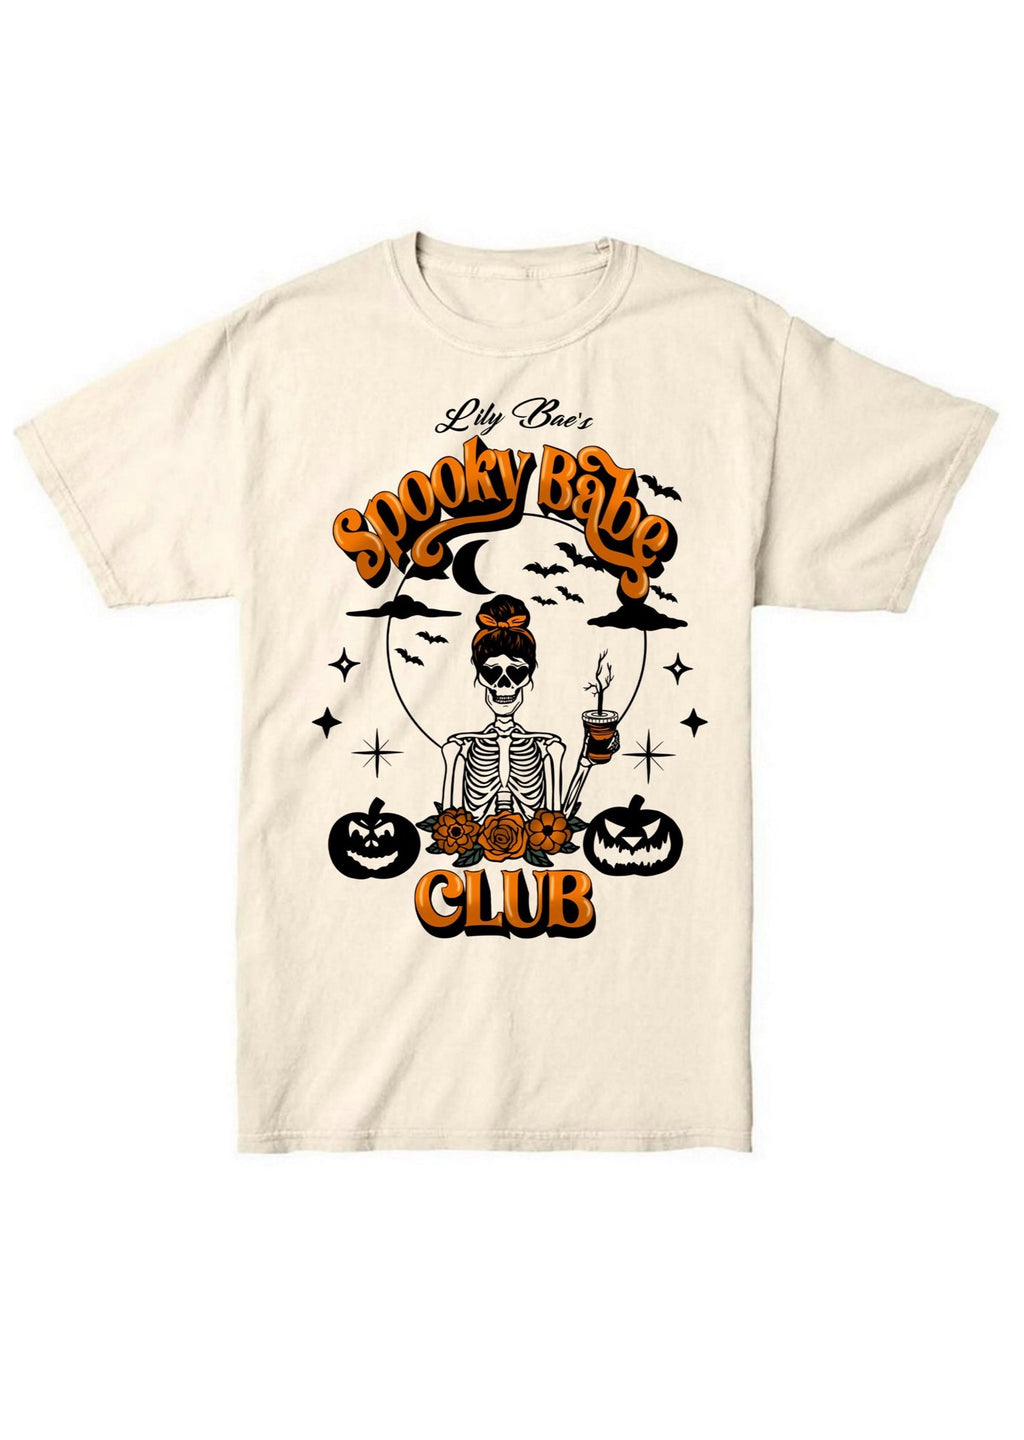 Lily Bae's Spooky Babe Club T-Shirt